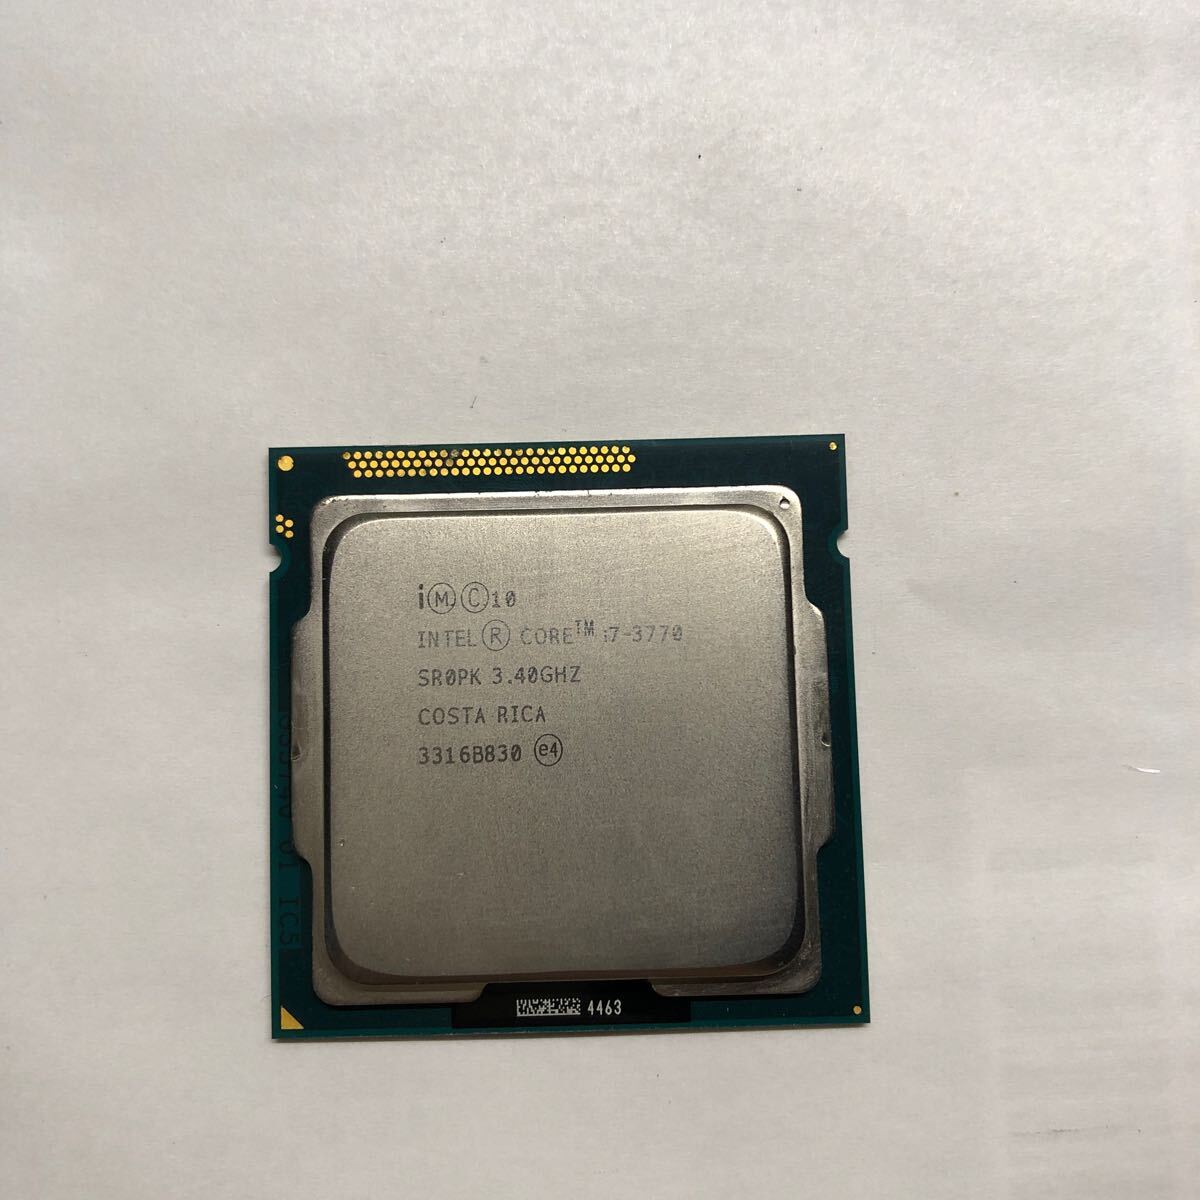 Intel Core i7 3770 SR0PK 3.40GHz /185_画像1